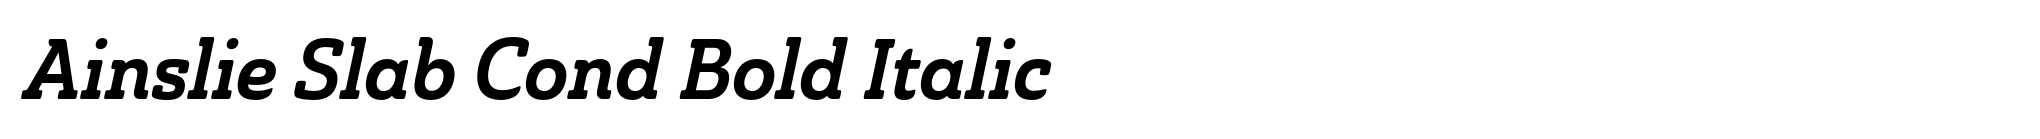 Ainslie Slab Cond Bold Italic image